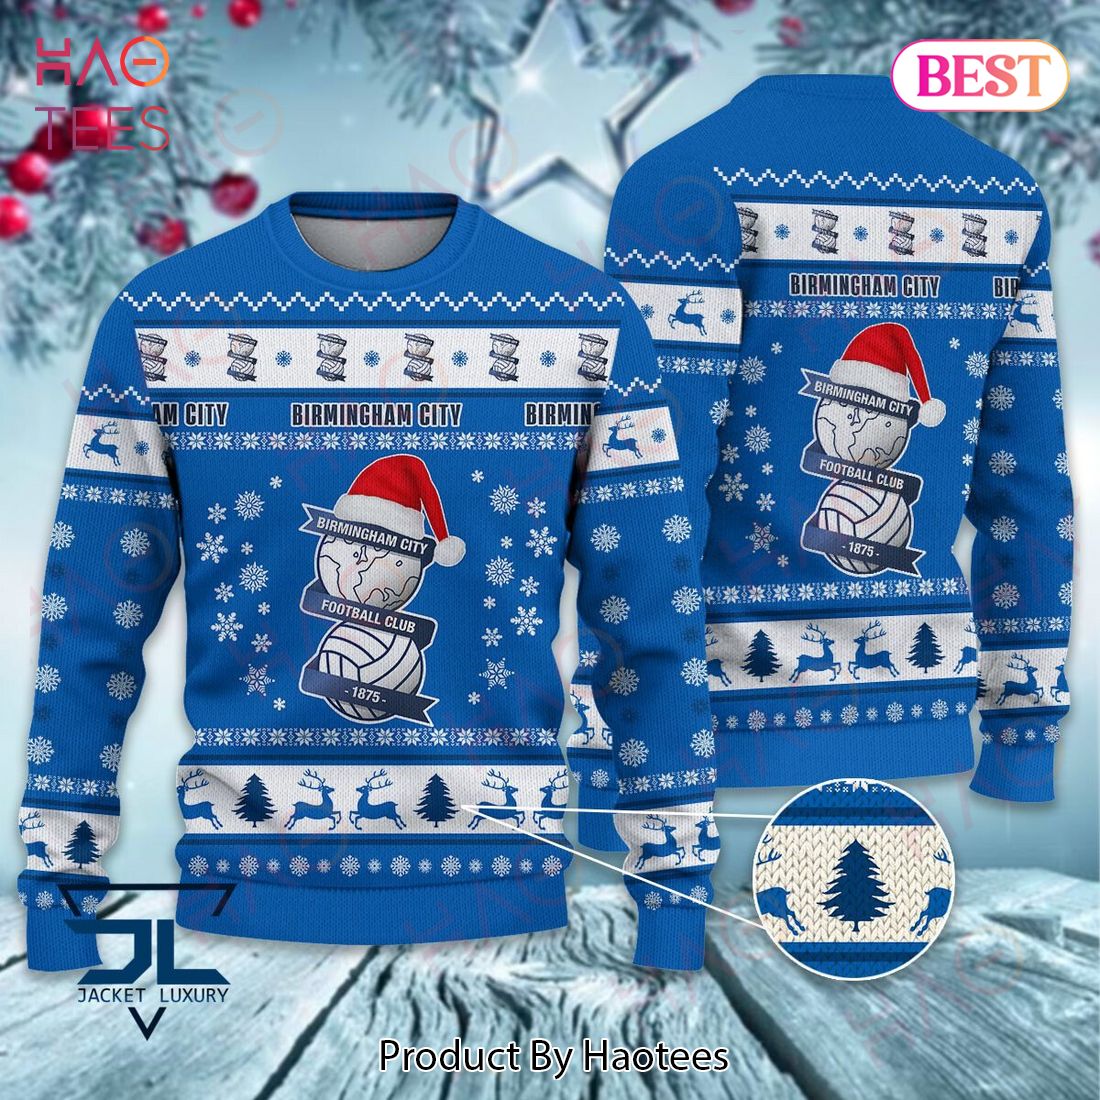 HOT Birmingham City F.C 1875  Christmas Luxury Brand Sweater Limited Edition